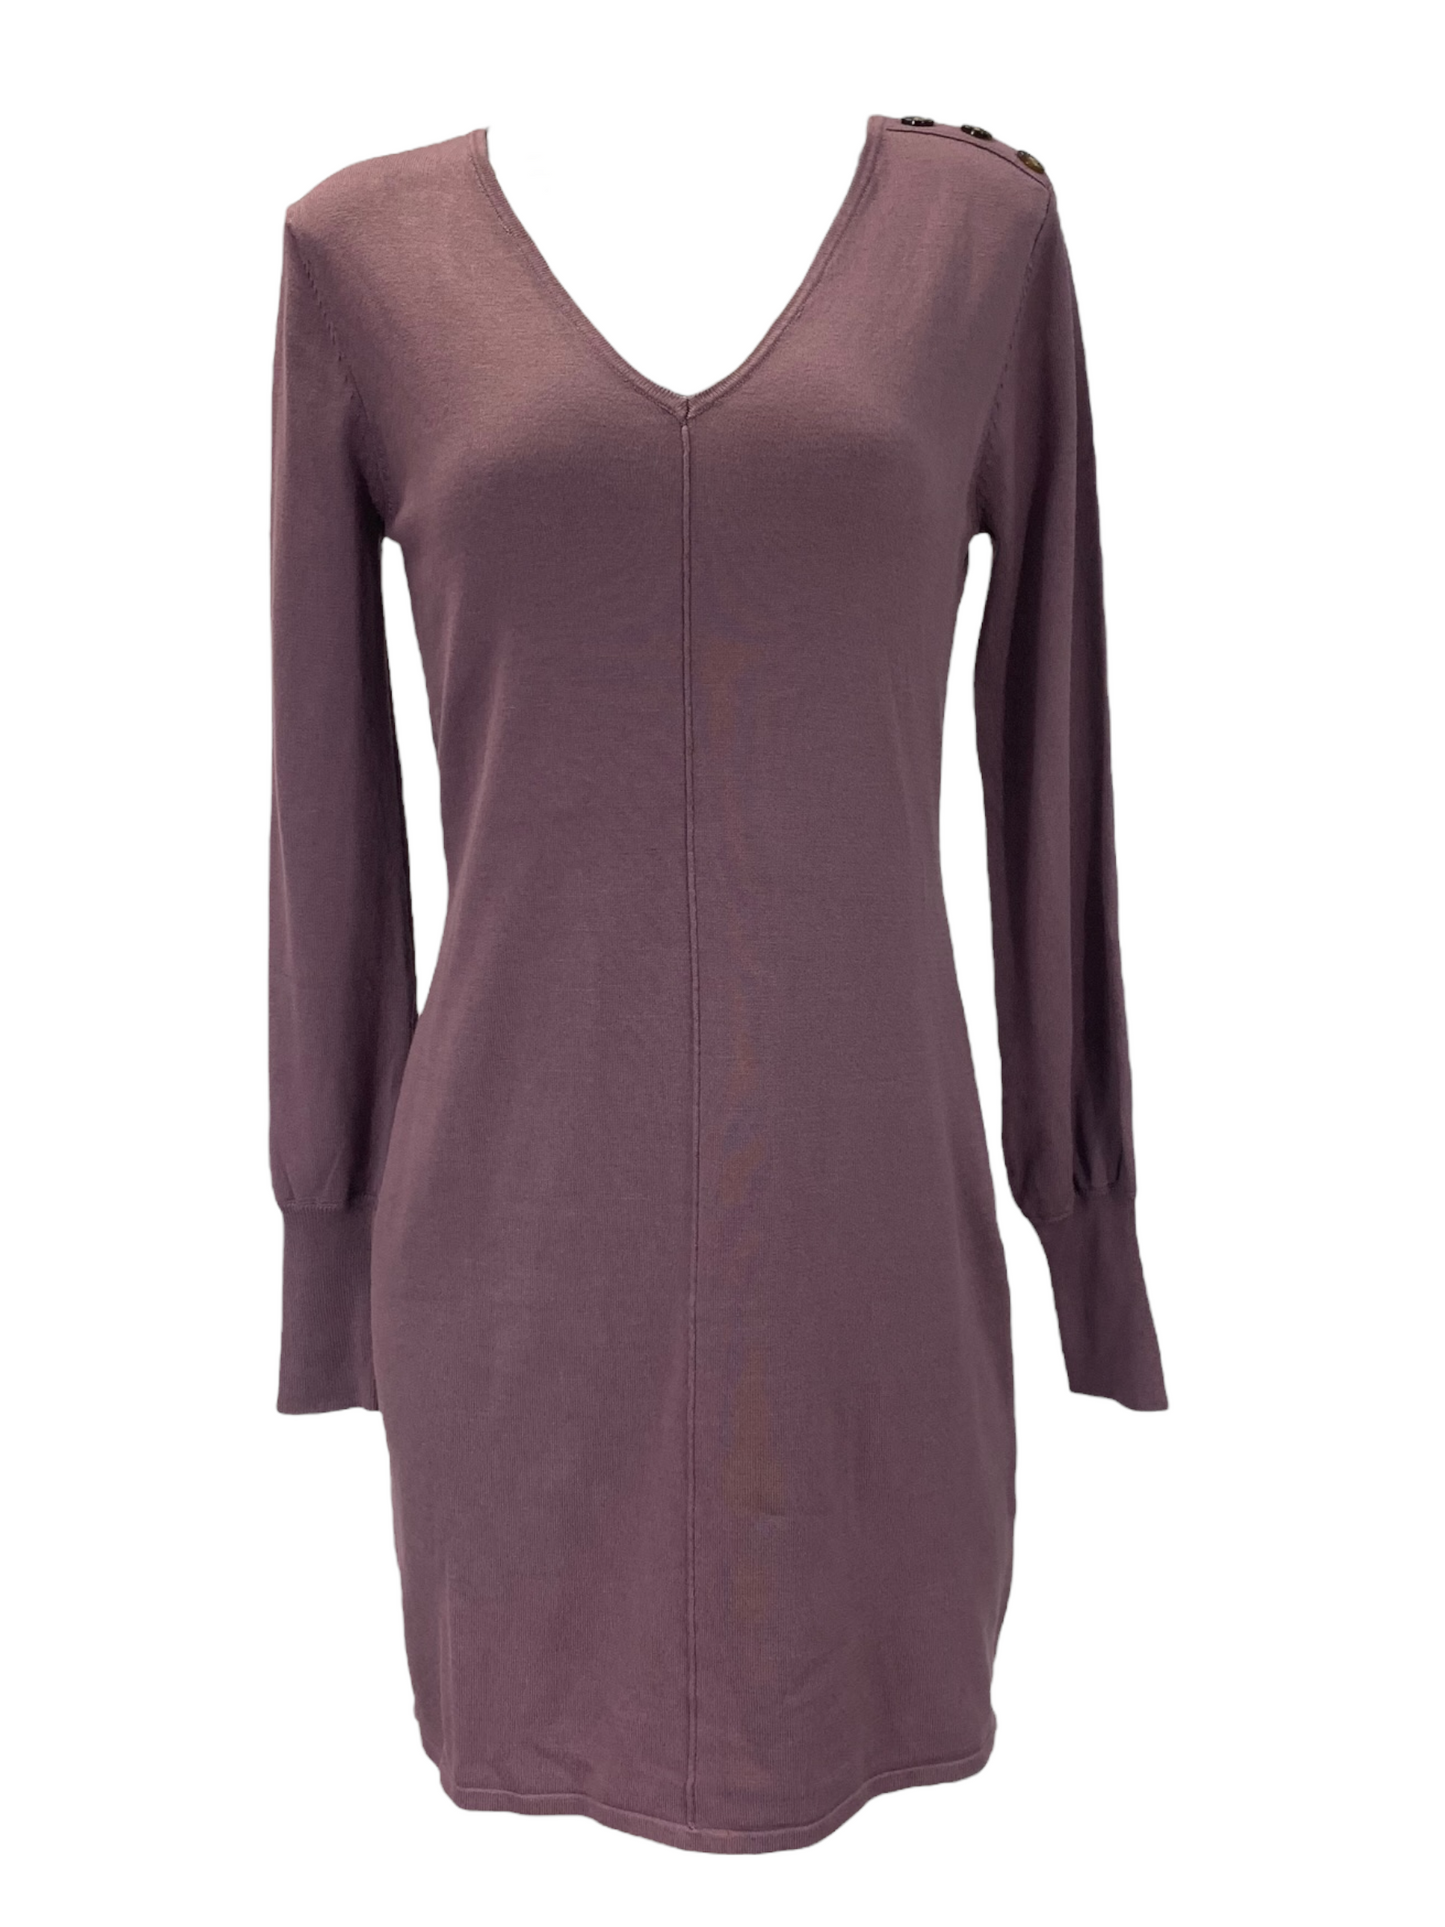 Women's Mandarine&Co grape-colored knit dress